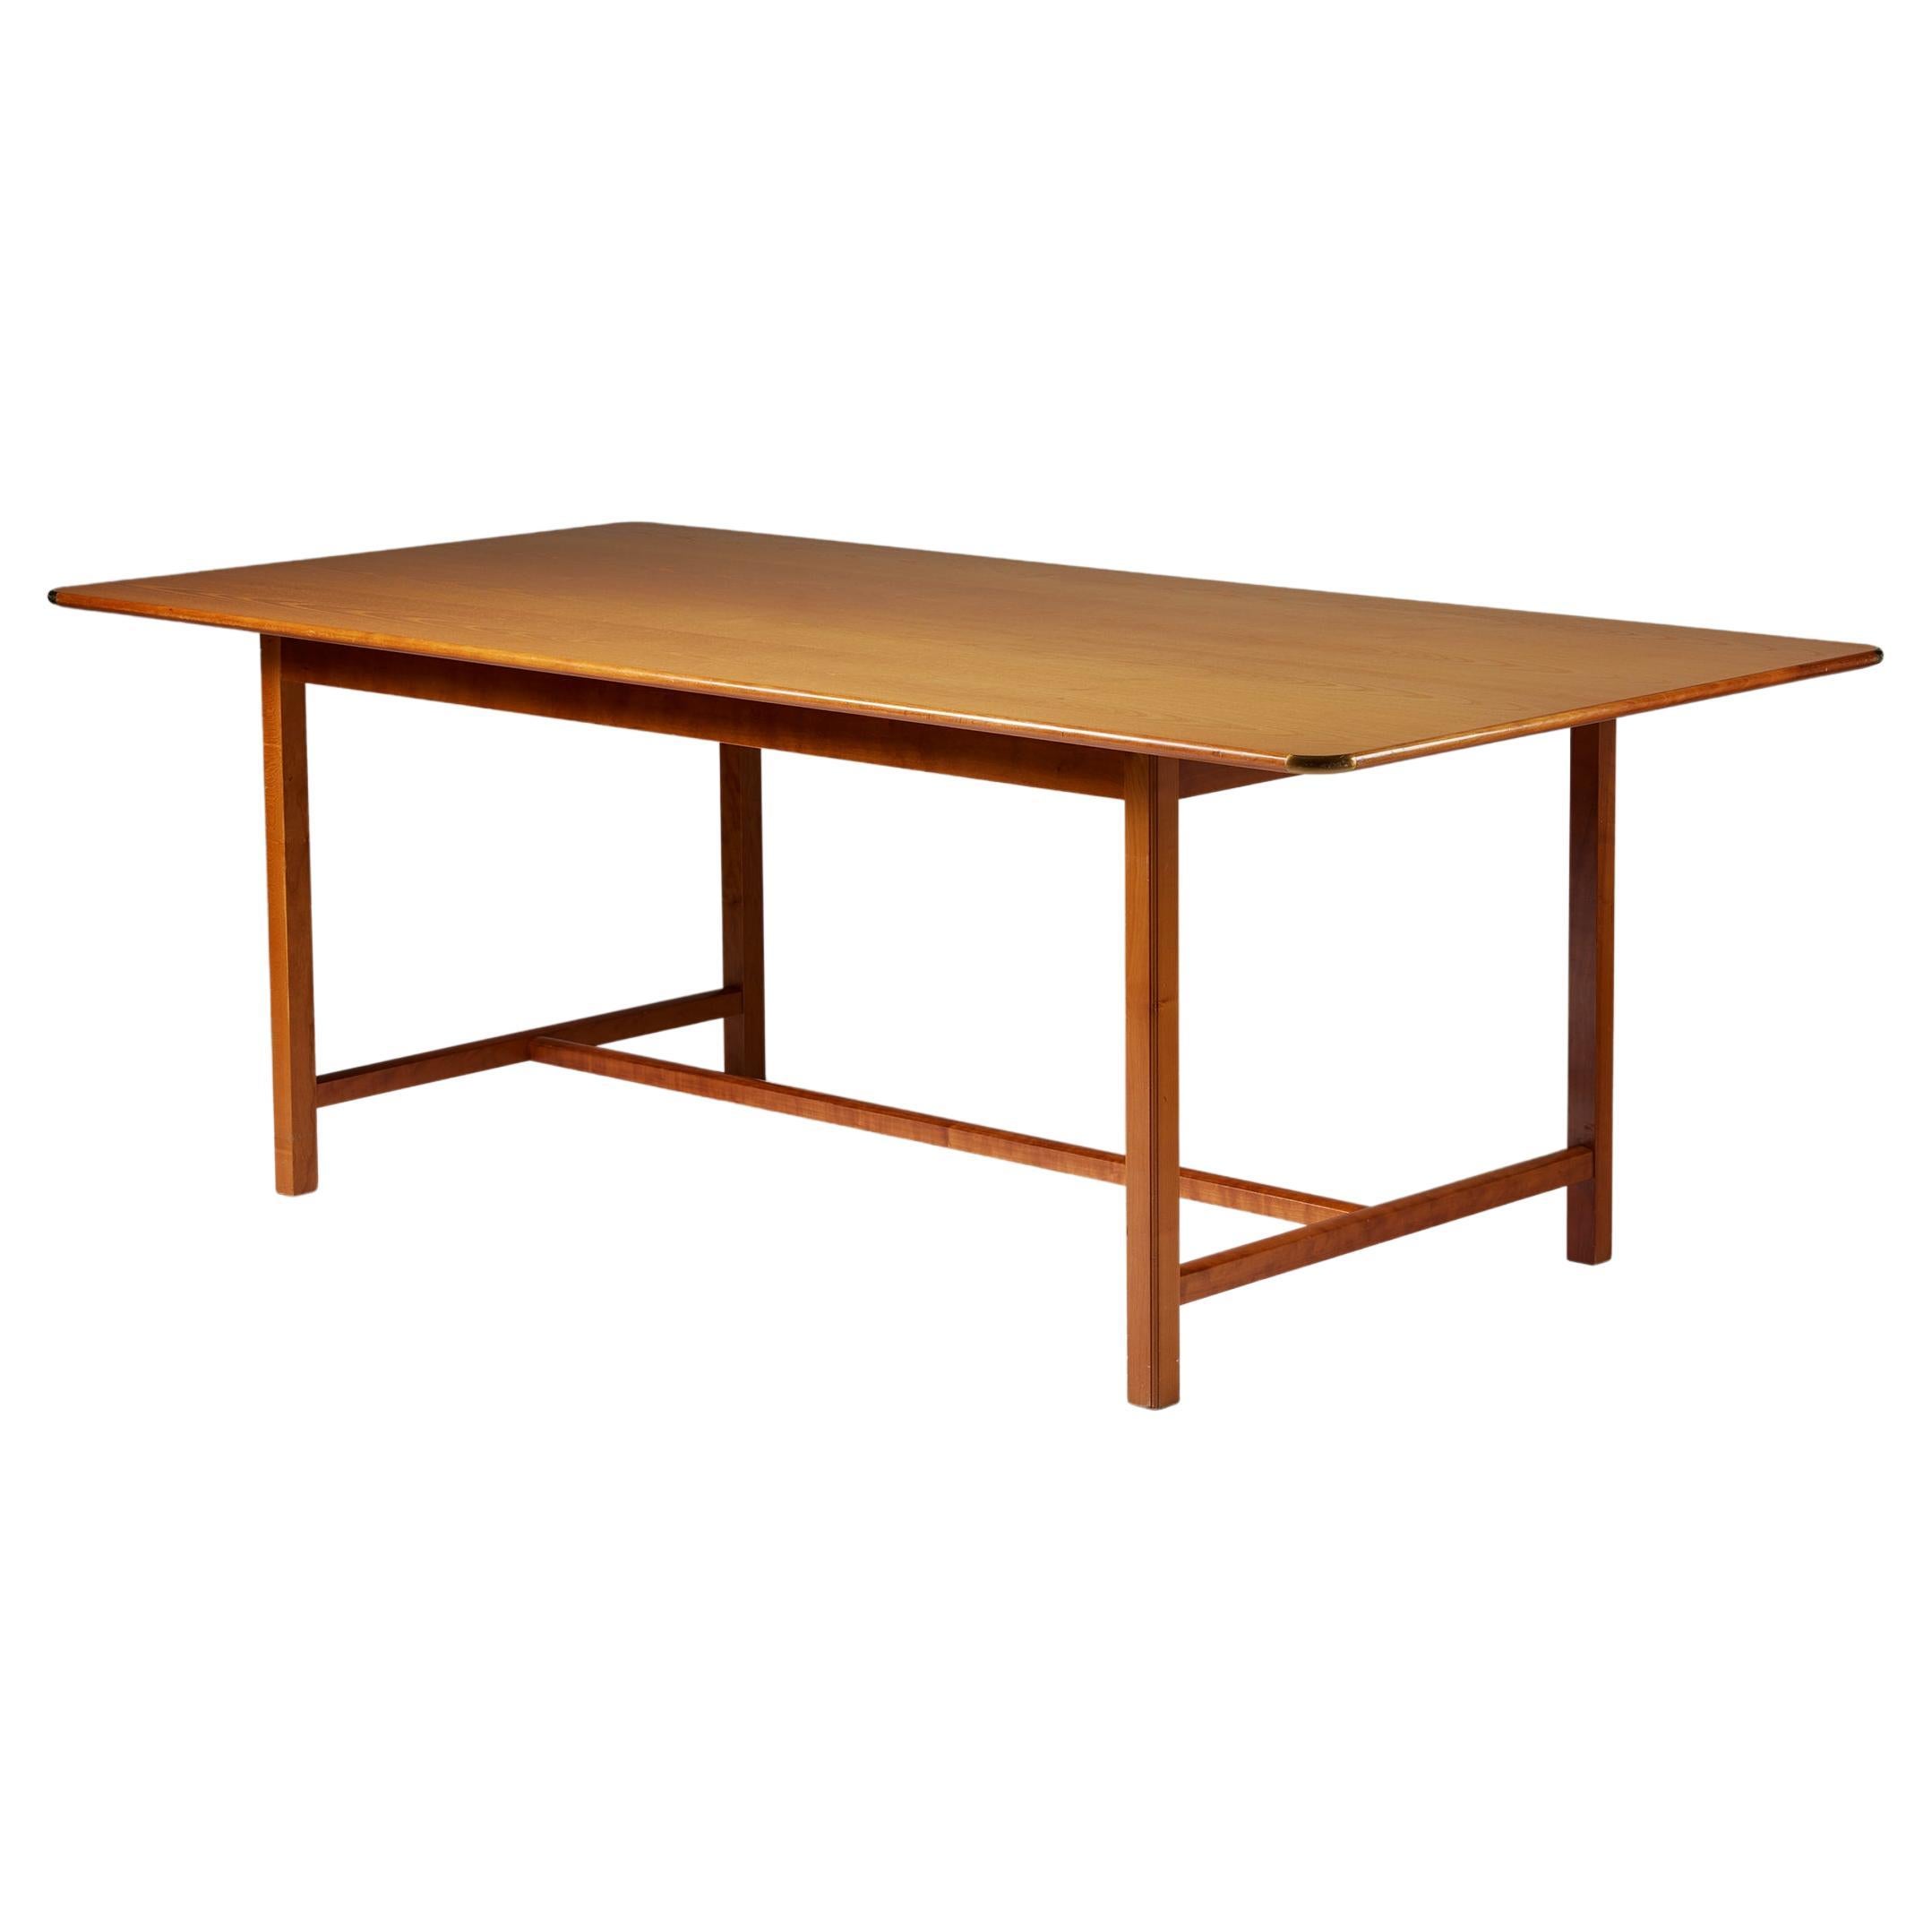 Table model 590 designed by Josef Frank for Svenskt Tenn, Sweden, 1950s, Elm